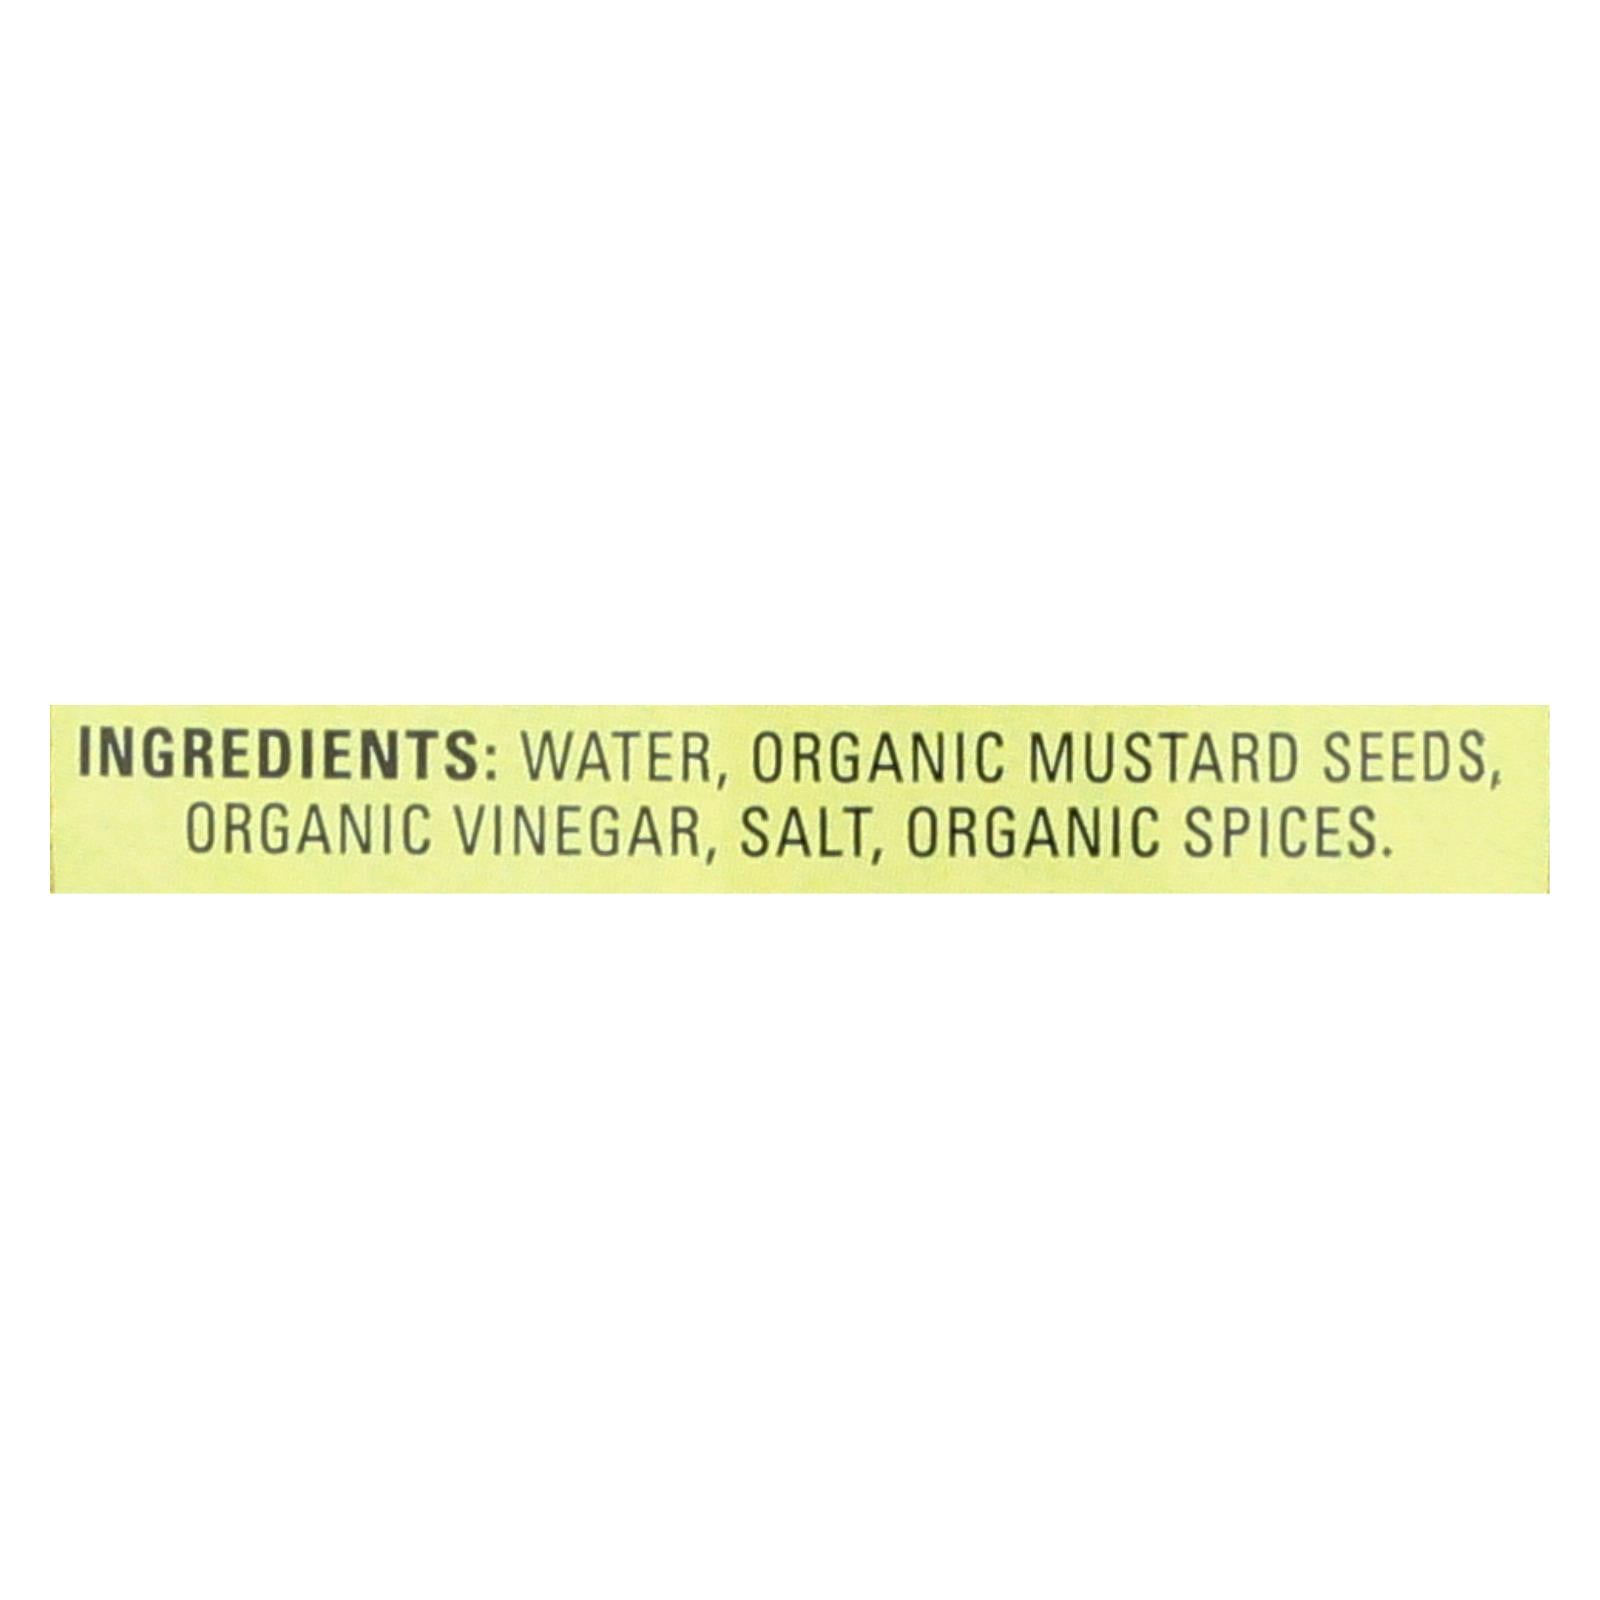 Organic Ville Organic Mustard - Stone Ground - Case Of 12 - 12 Oz.